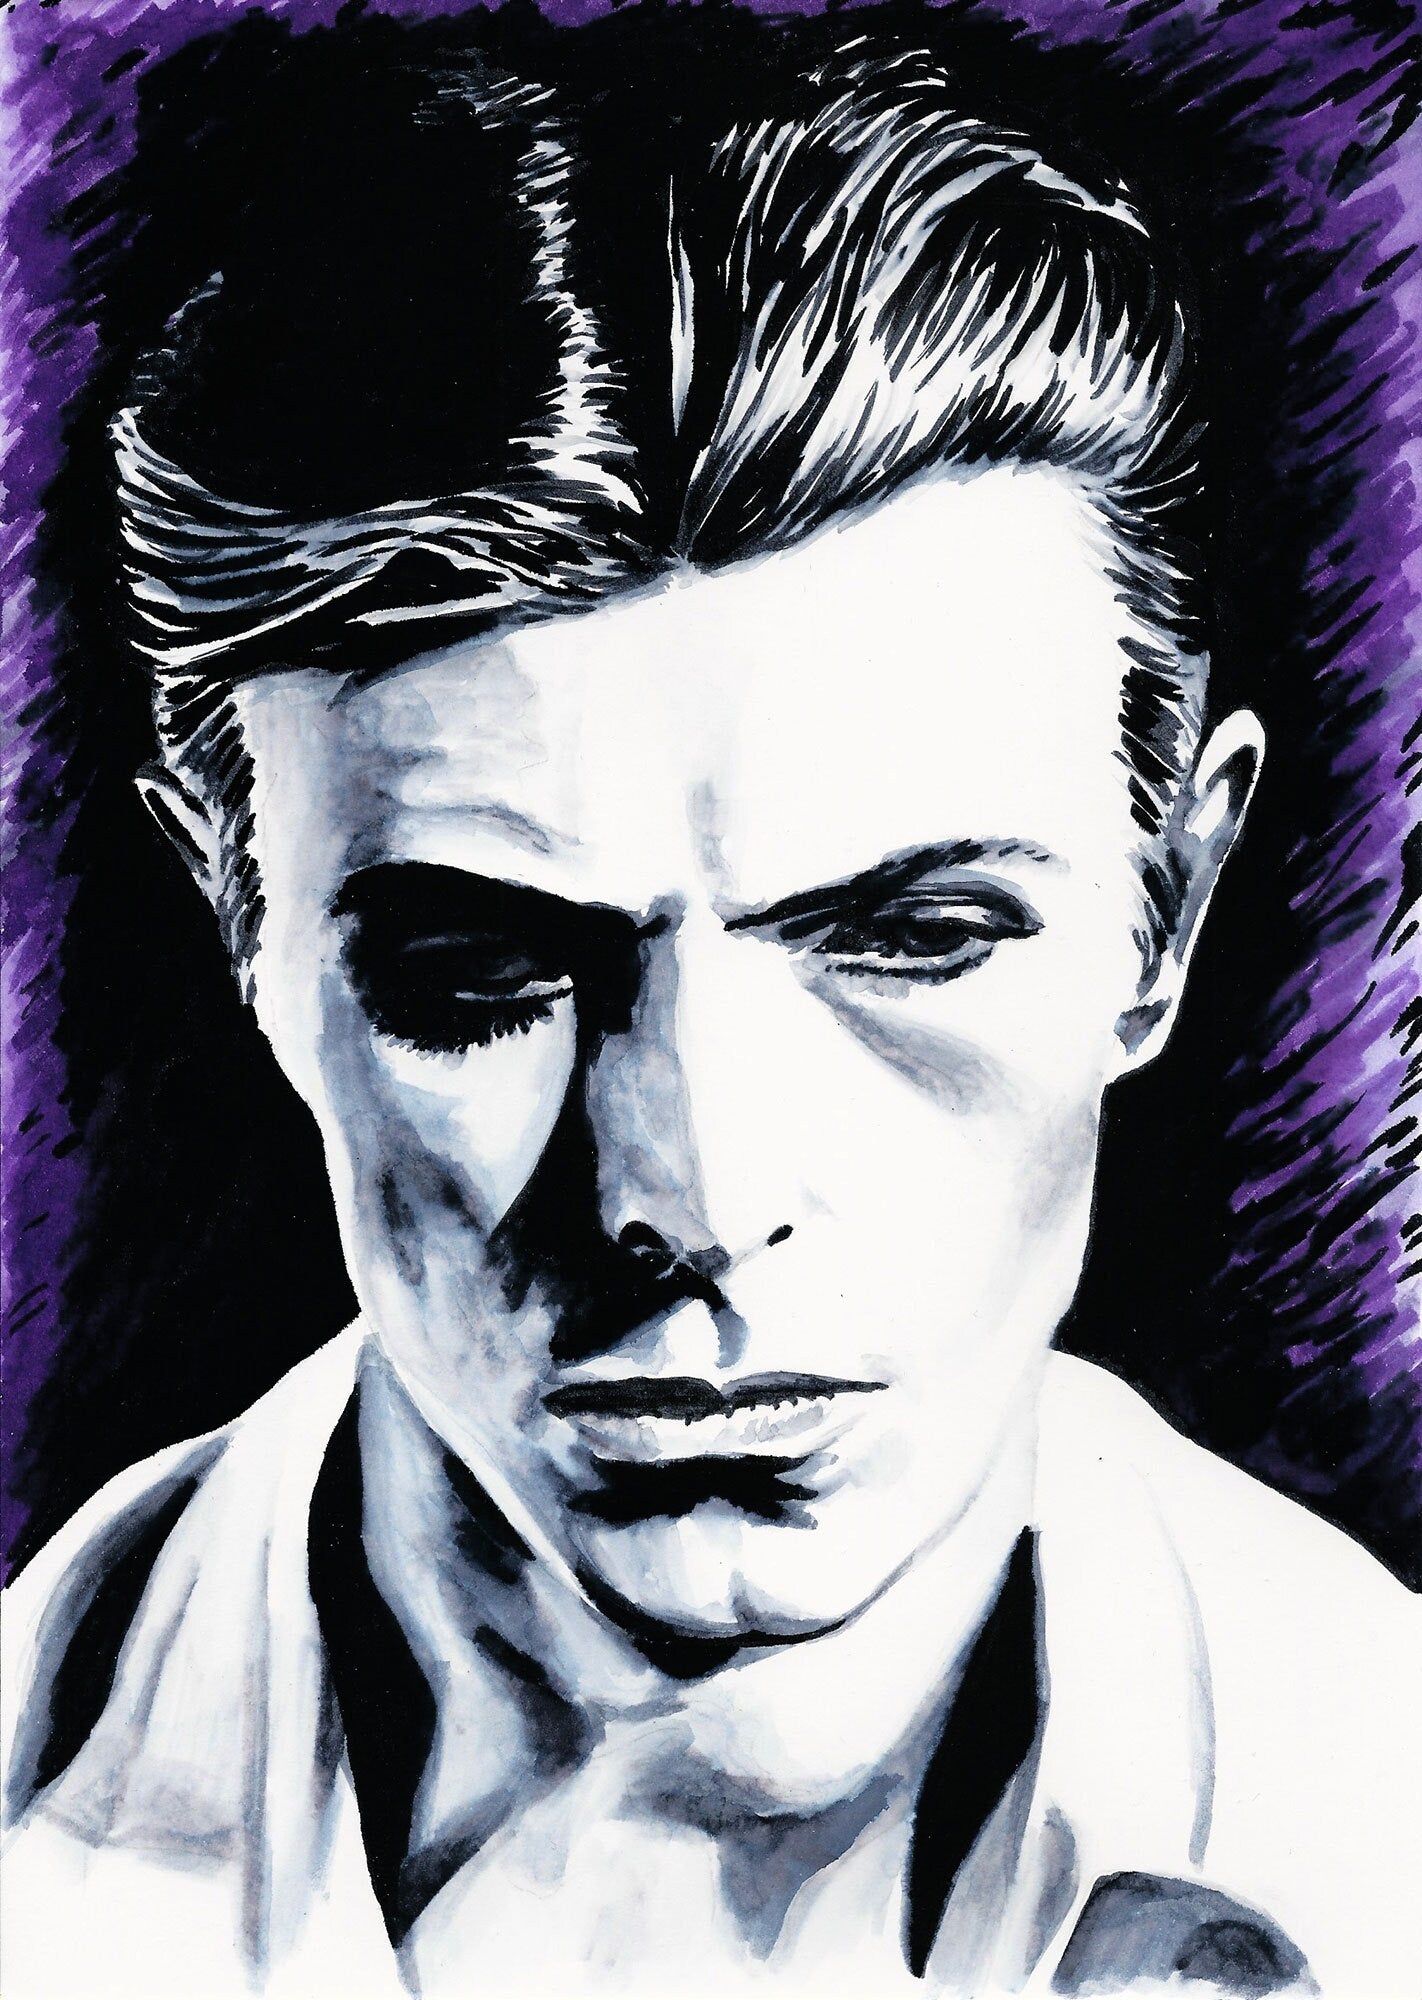 David Bowie art print, unframed, Bowie artwork, Bowie wall decor, Thin White Duke, Bowie fan gift, Bowie poster, Bowie merch, Bowie picture